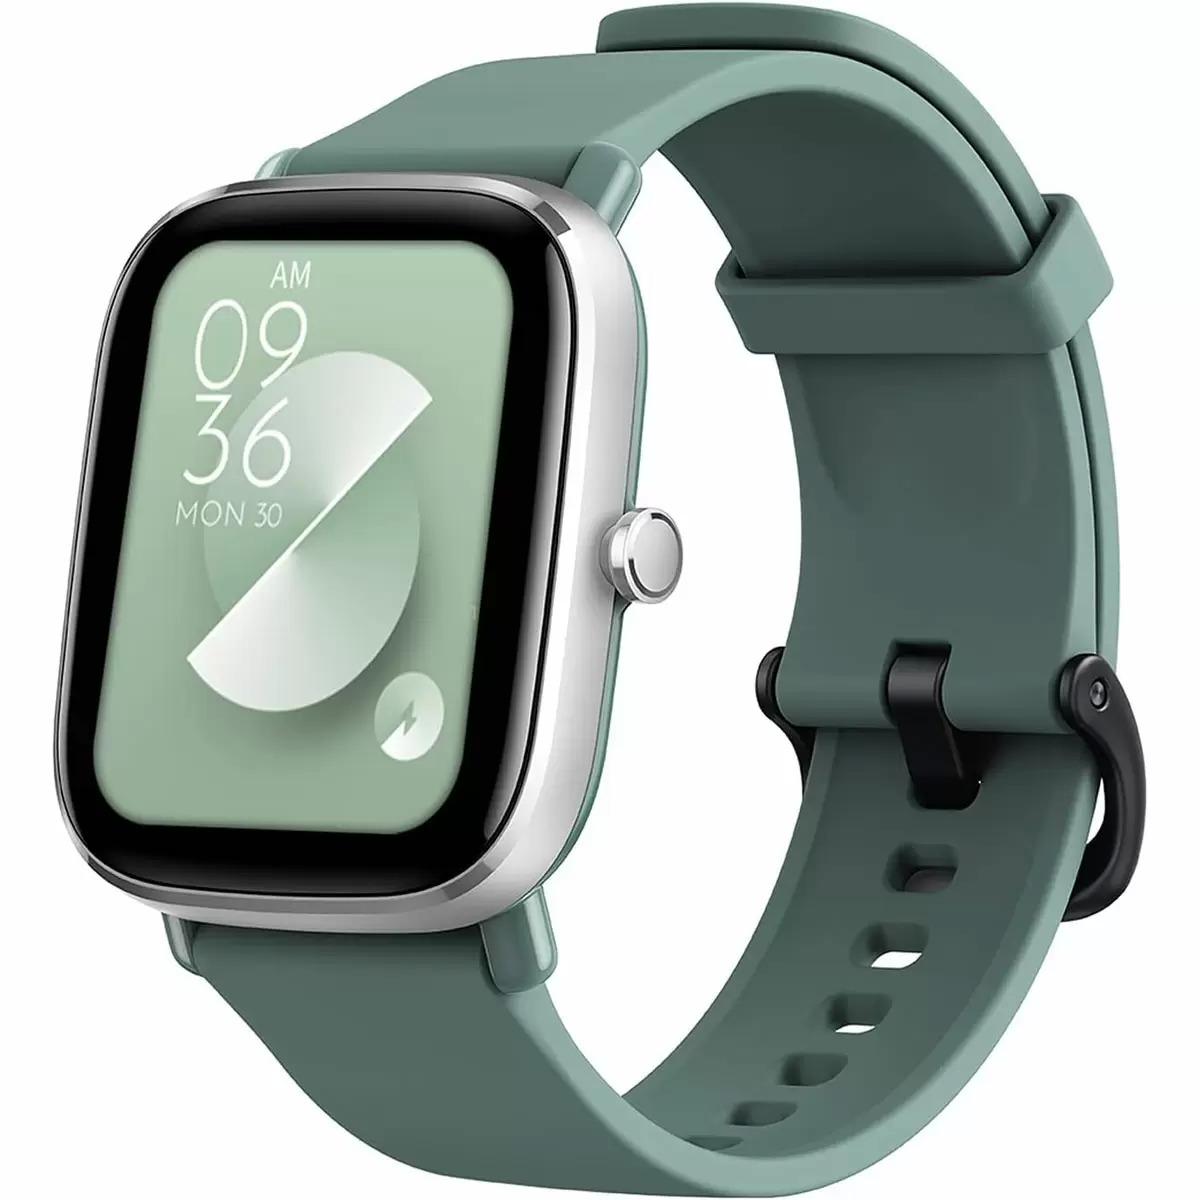 Amazfit GTS 2 Mini Smart Watch for $69.99 Shipped